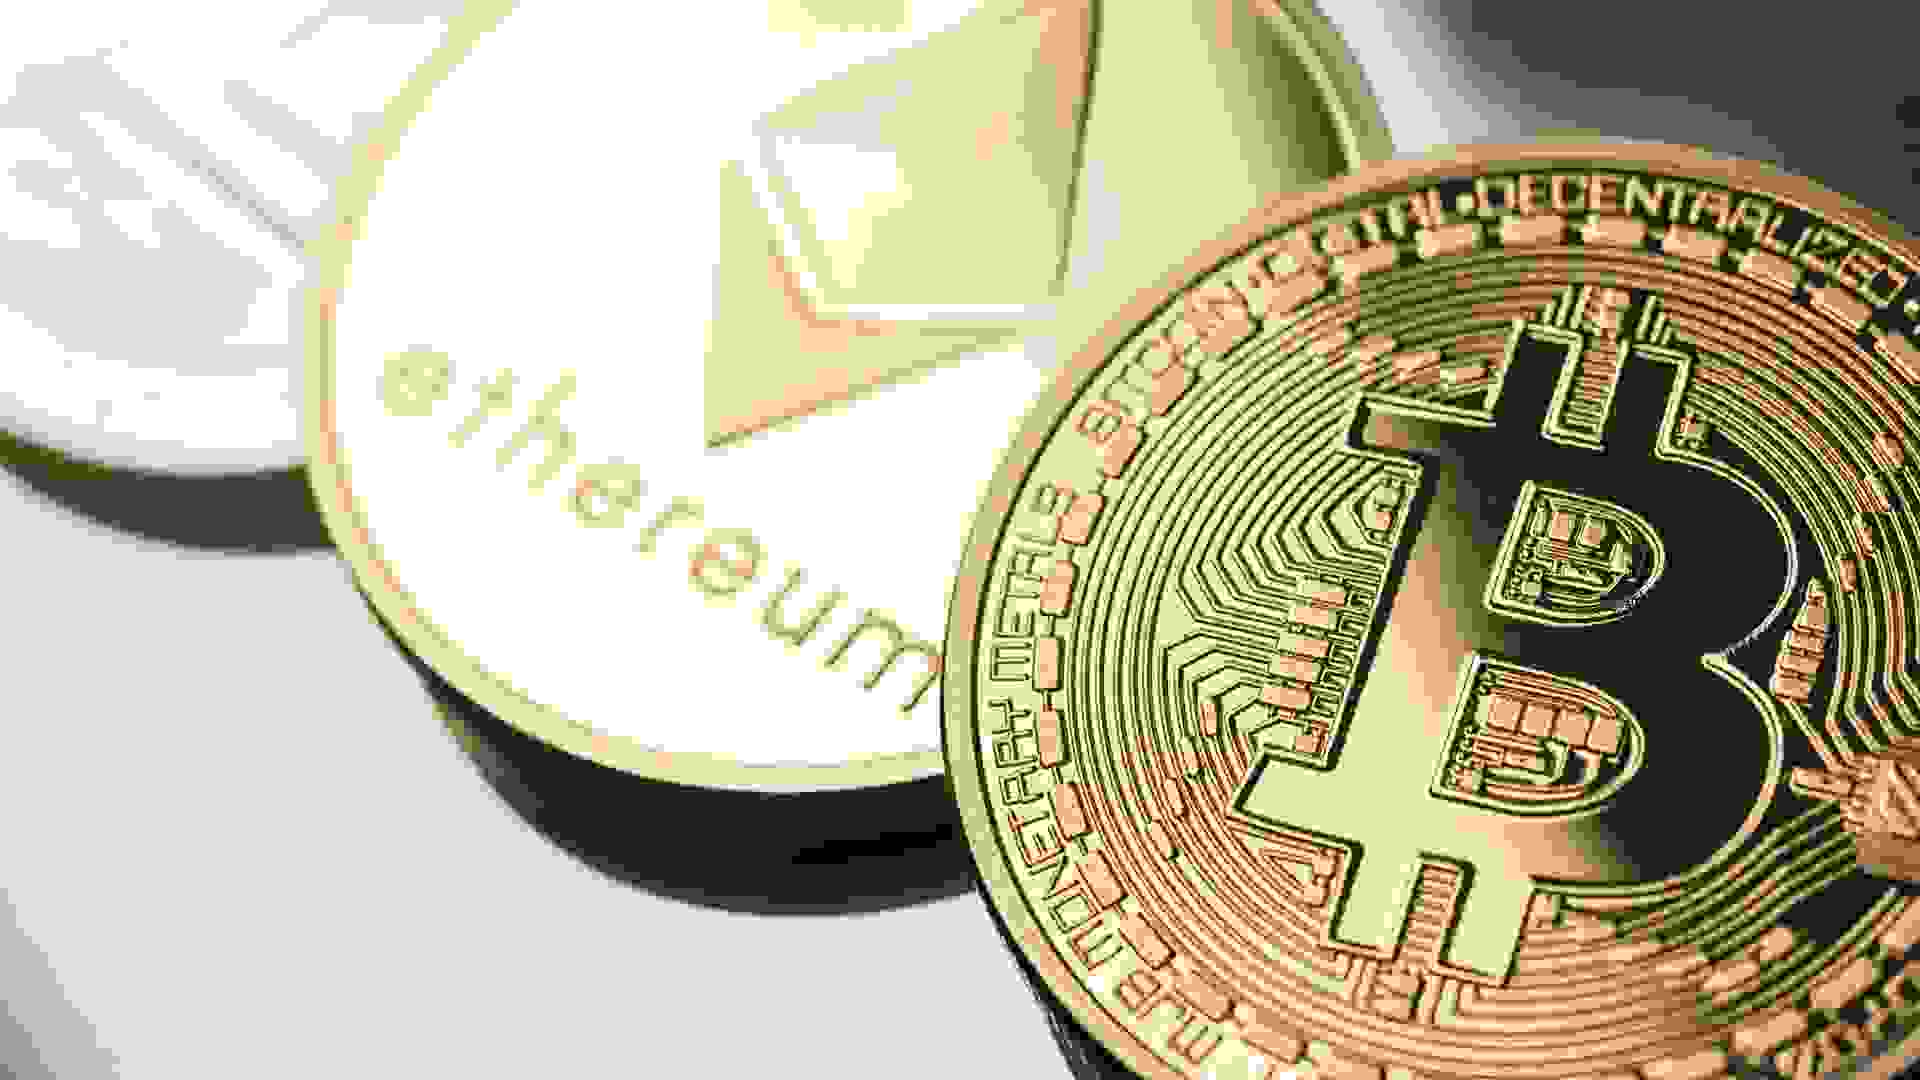 cryptocurrency blockchain ethereum bitcoin litecoin